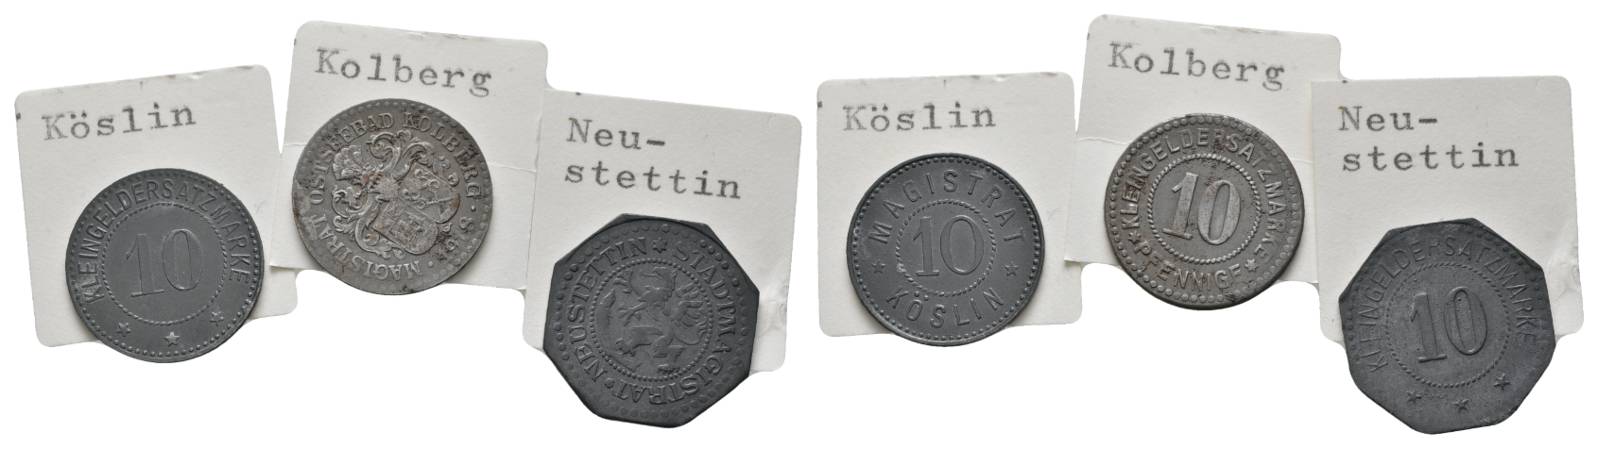  Pommern, Köslin/Kolberg/Neustettin, 3 Notmünzen   